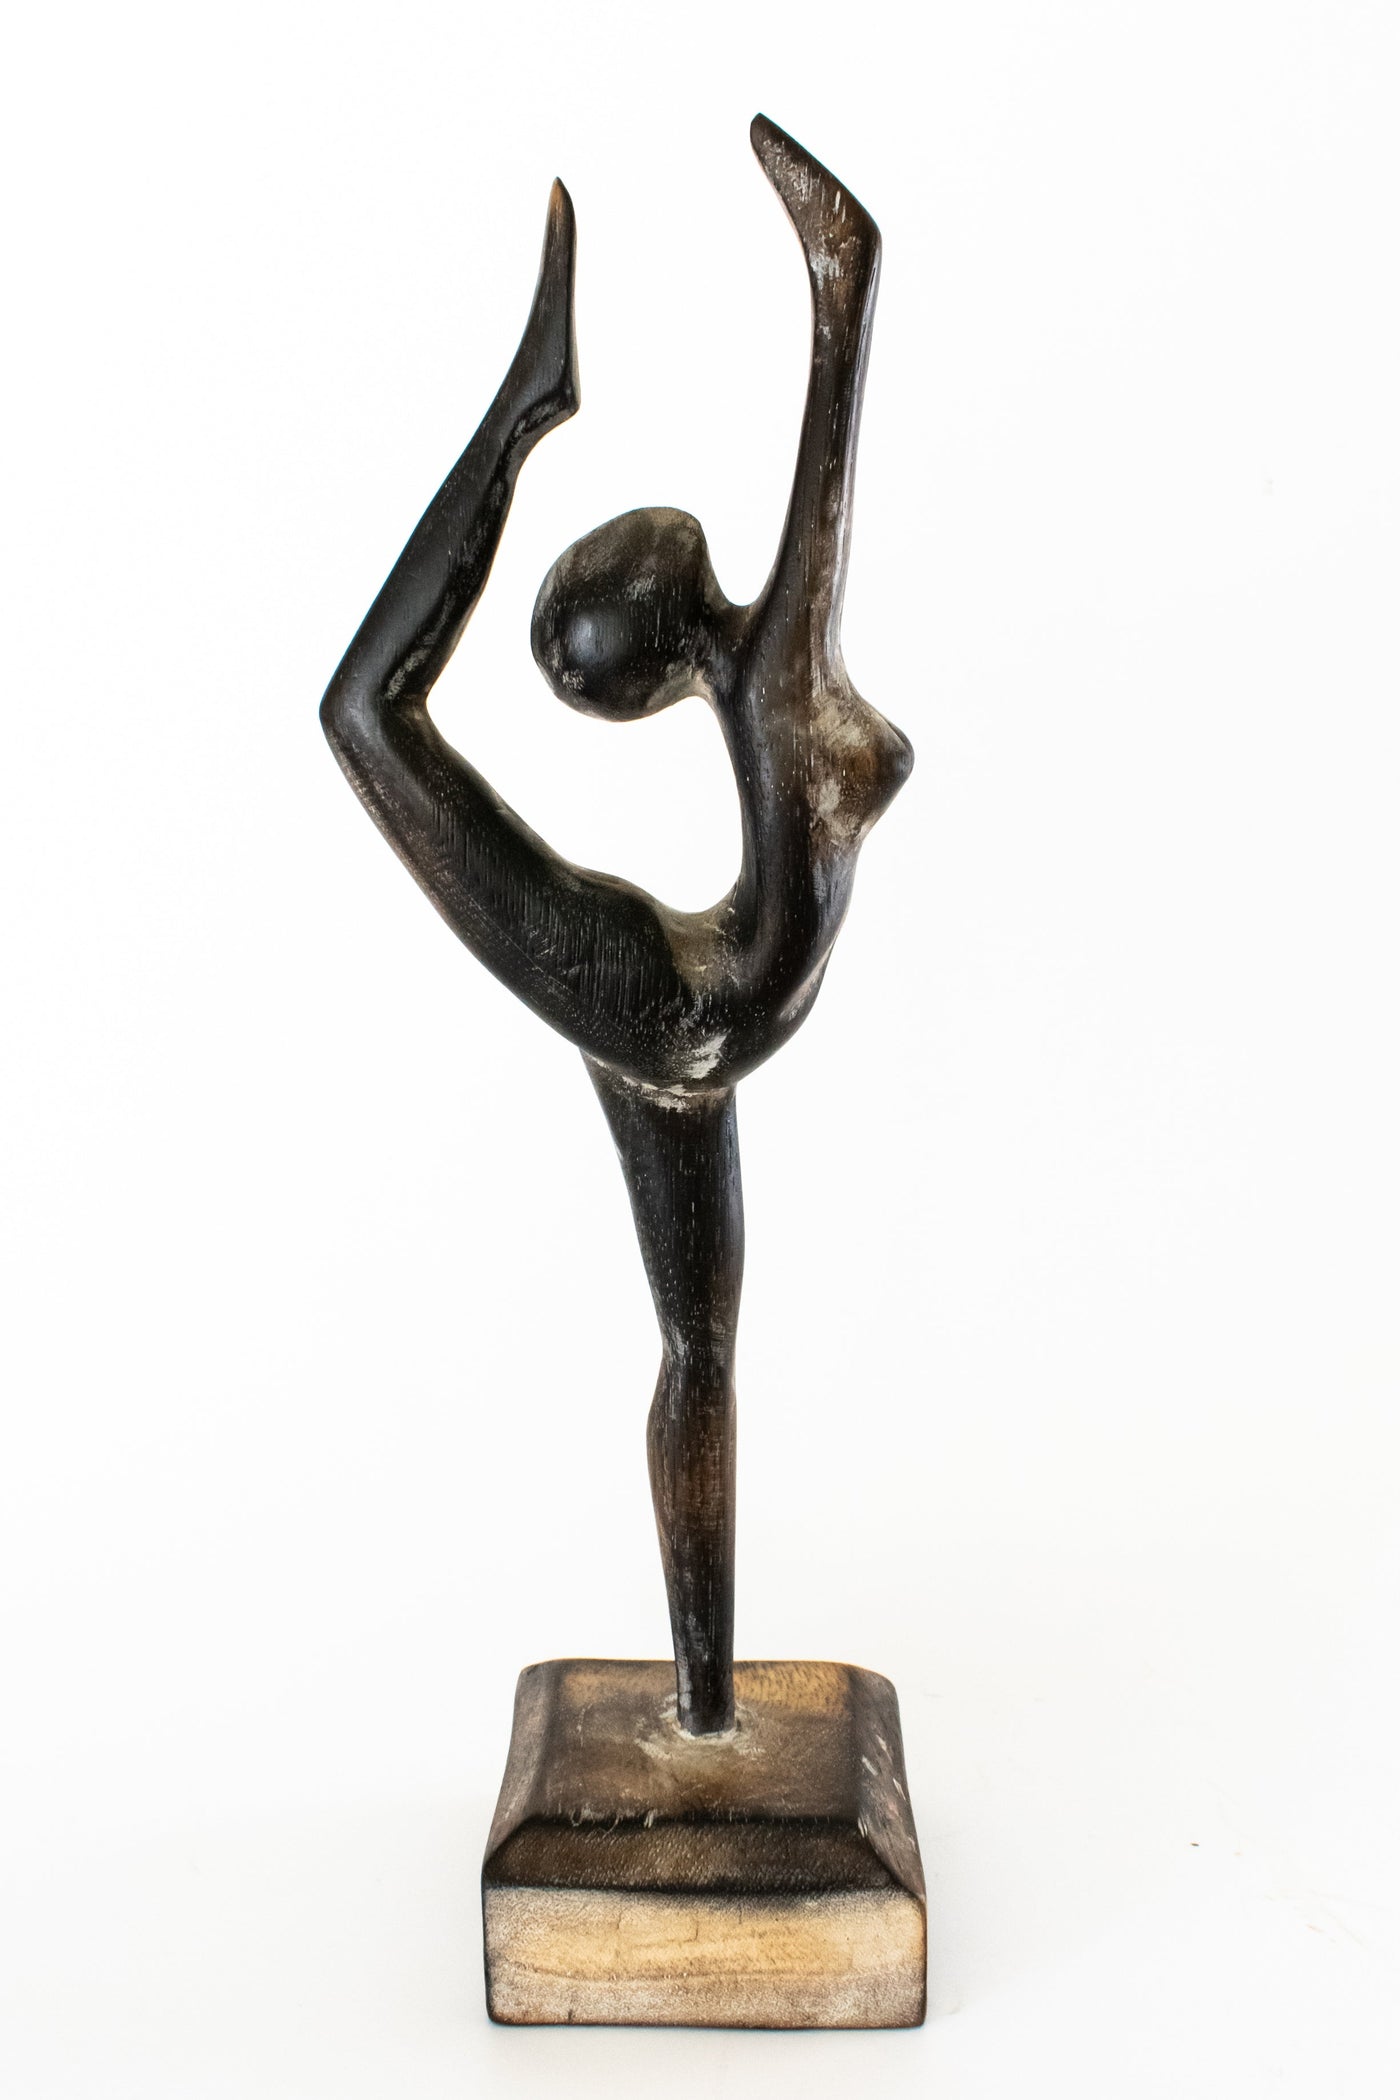 14" Wooden Handmade Abstract Ballet Dancer Sculpture Statue Handcrafted Gift Art Decor Figurine Accent Hand Carved Ballerina Attitude Dèrriere Cambrè